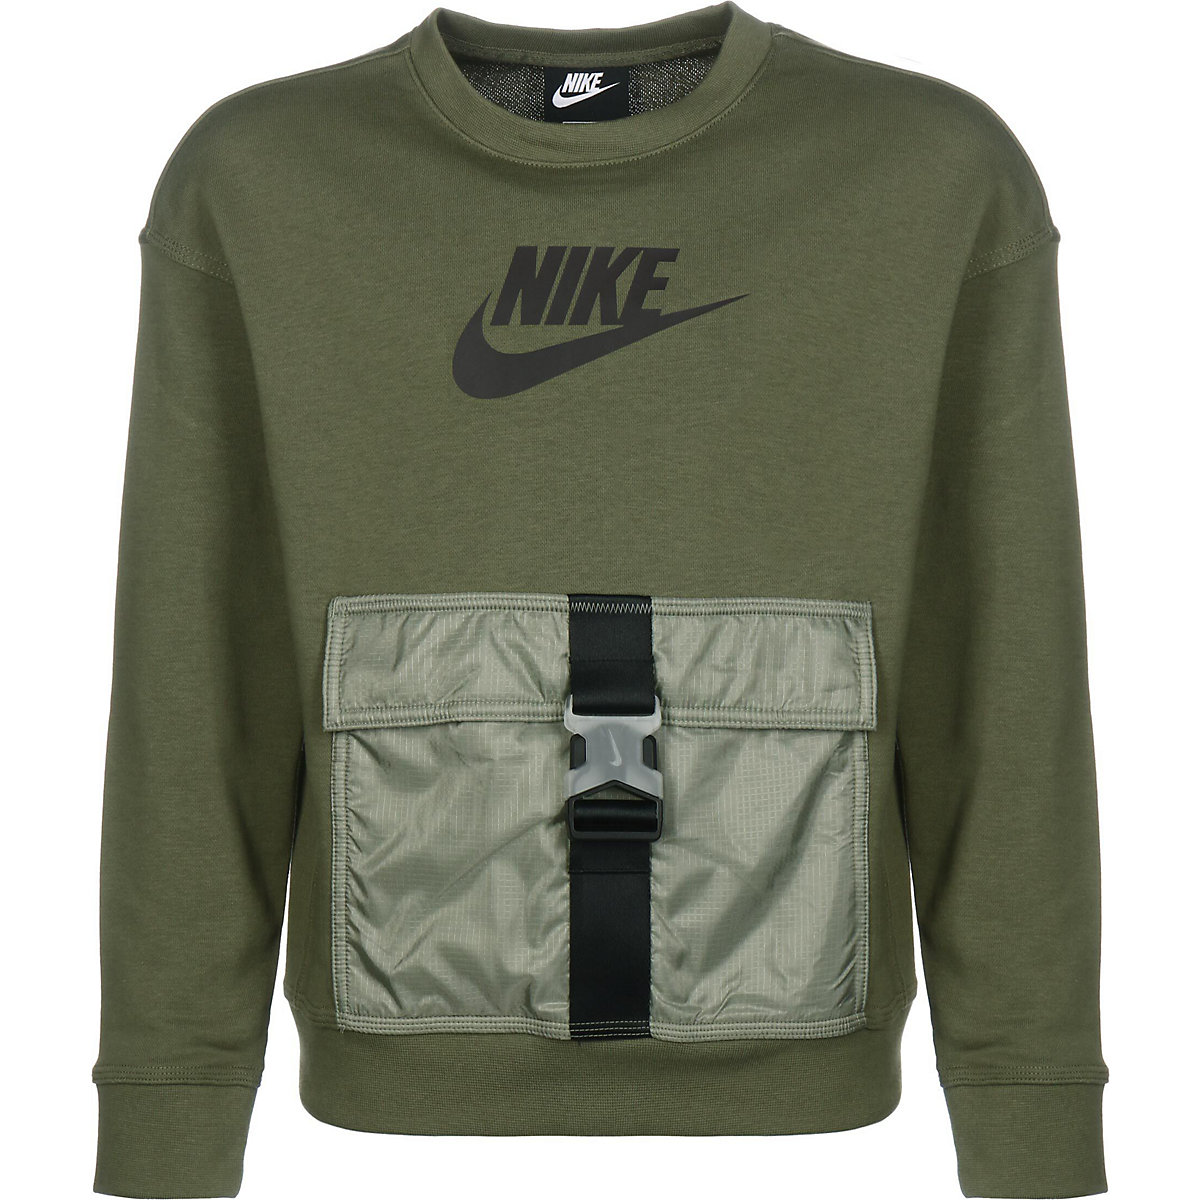 NIKE Nike Sweater Kinder Sportswear Sweatshirts oliv